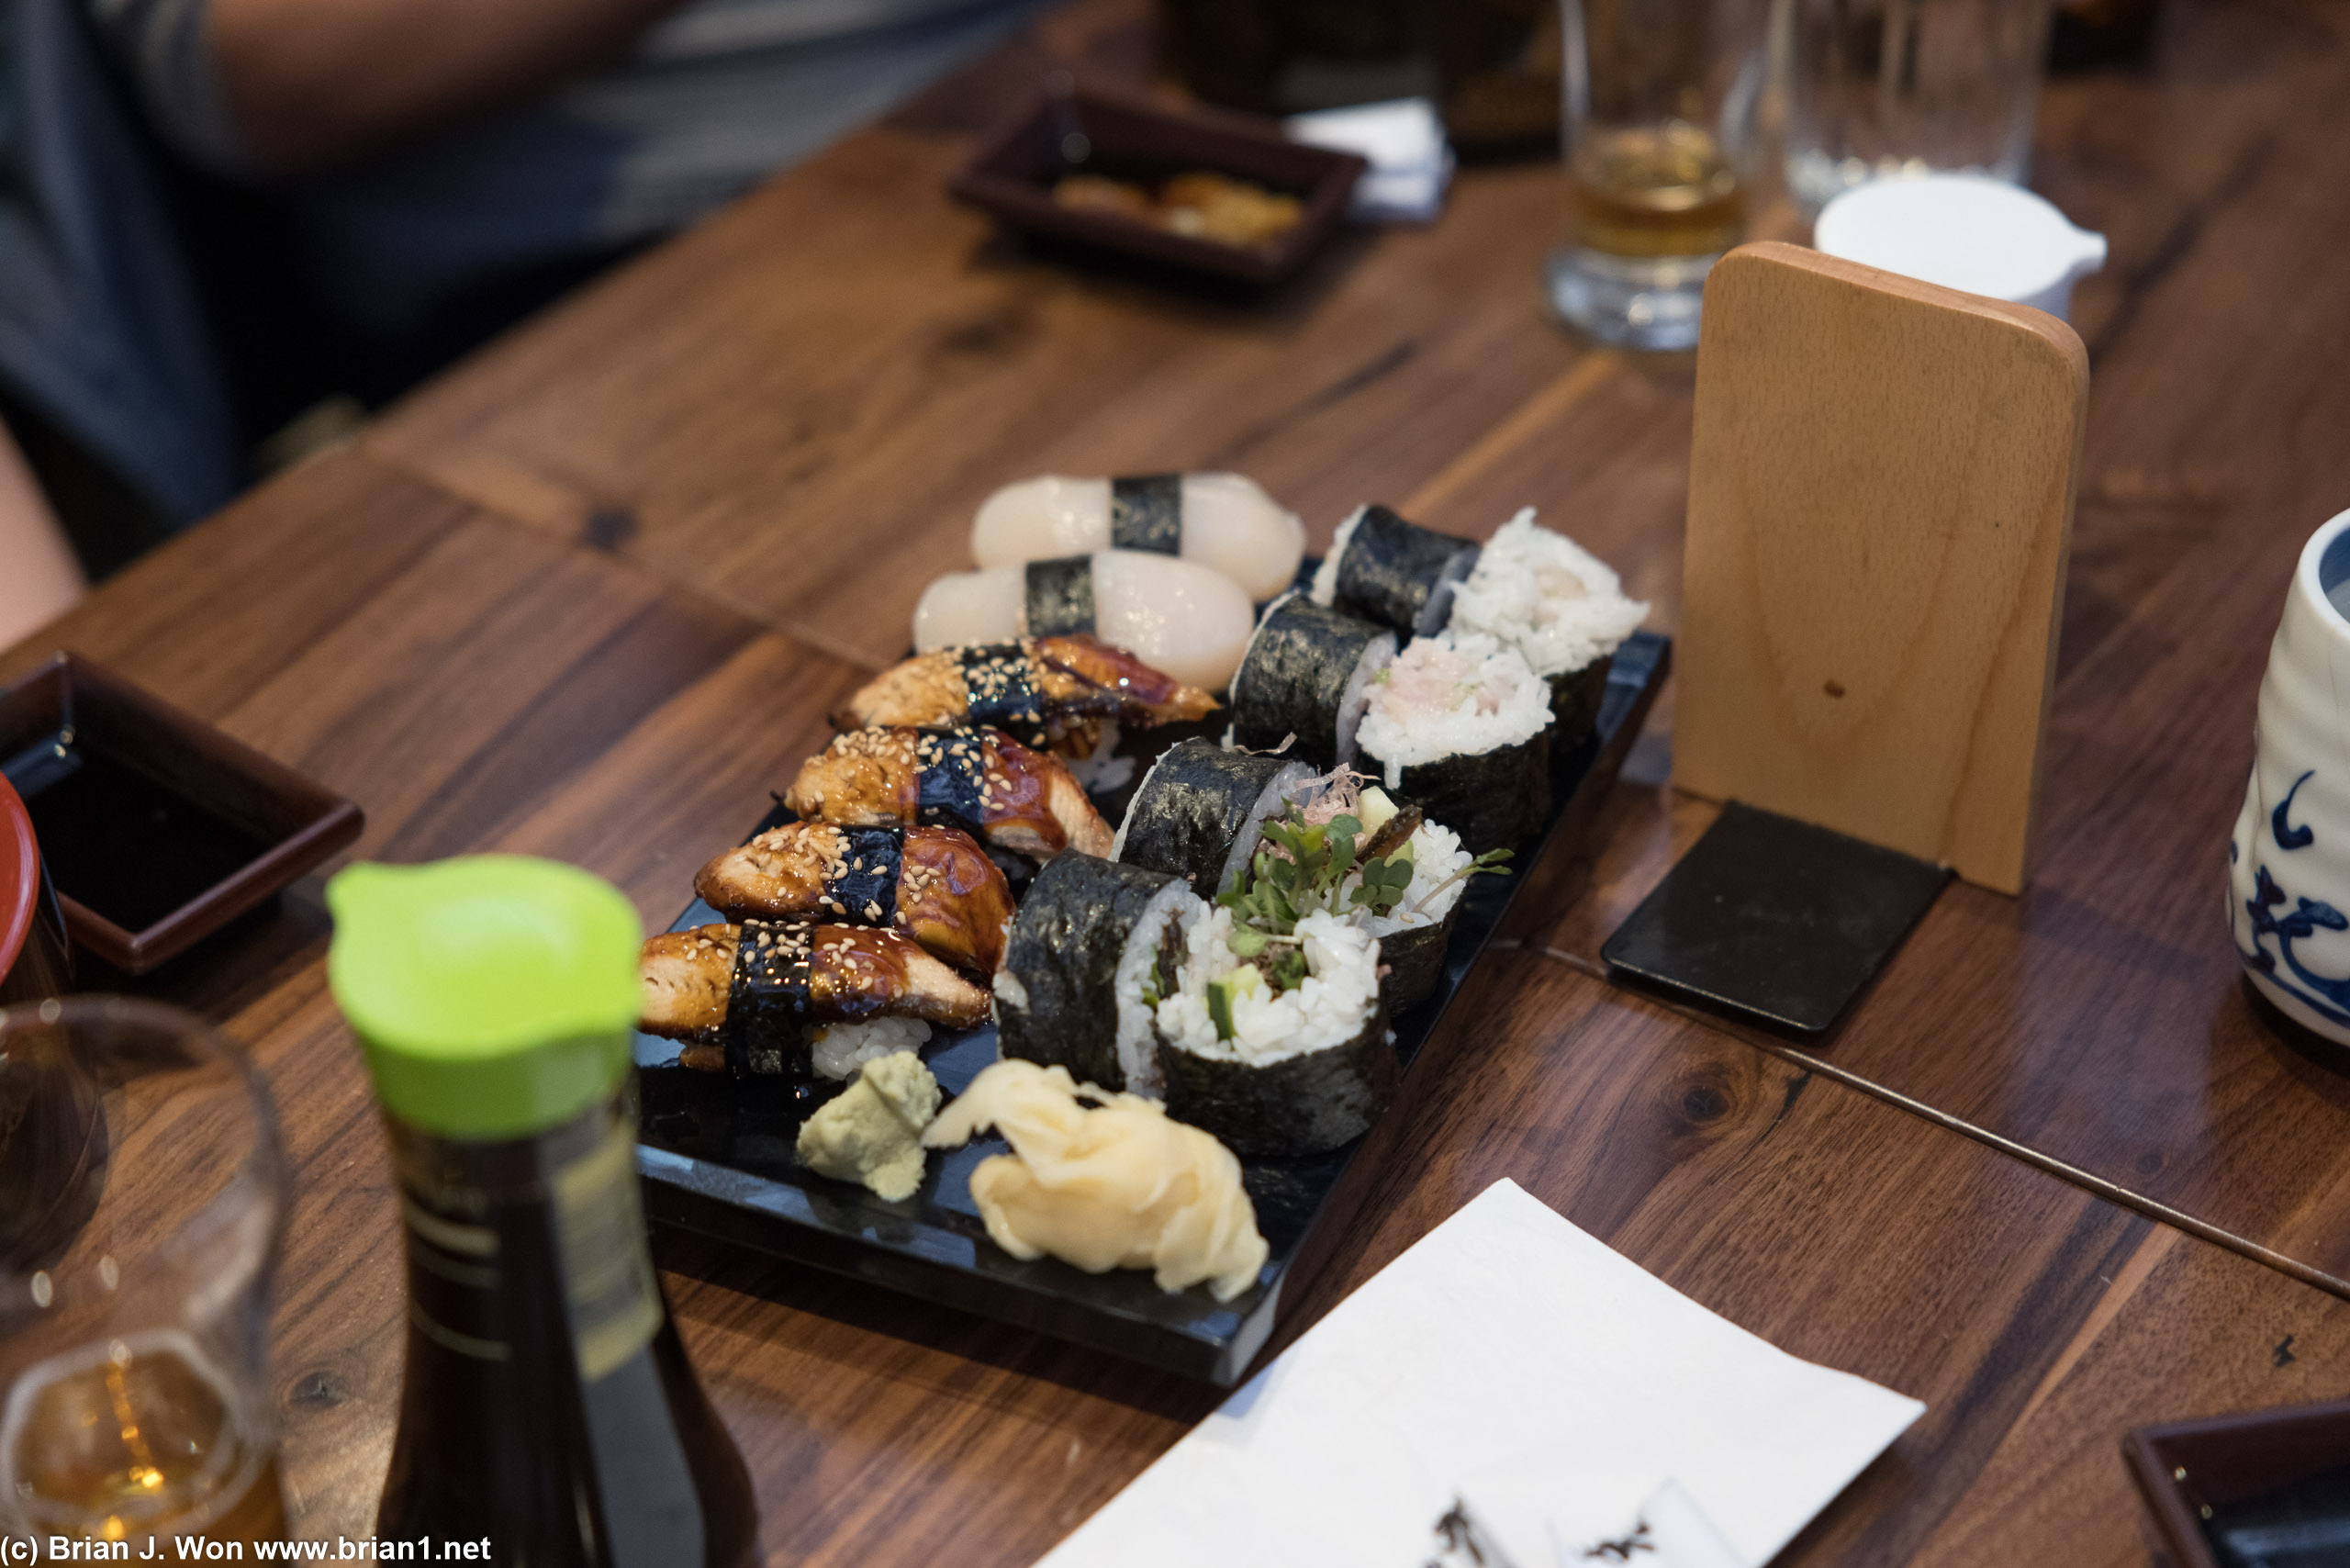 More sushi: unagi (freshwater eel), hotate (scallop), salmon skin, and I think that's hamachi (yellowtail).